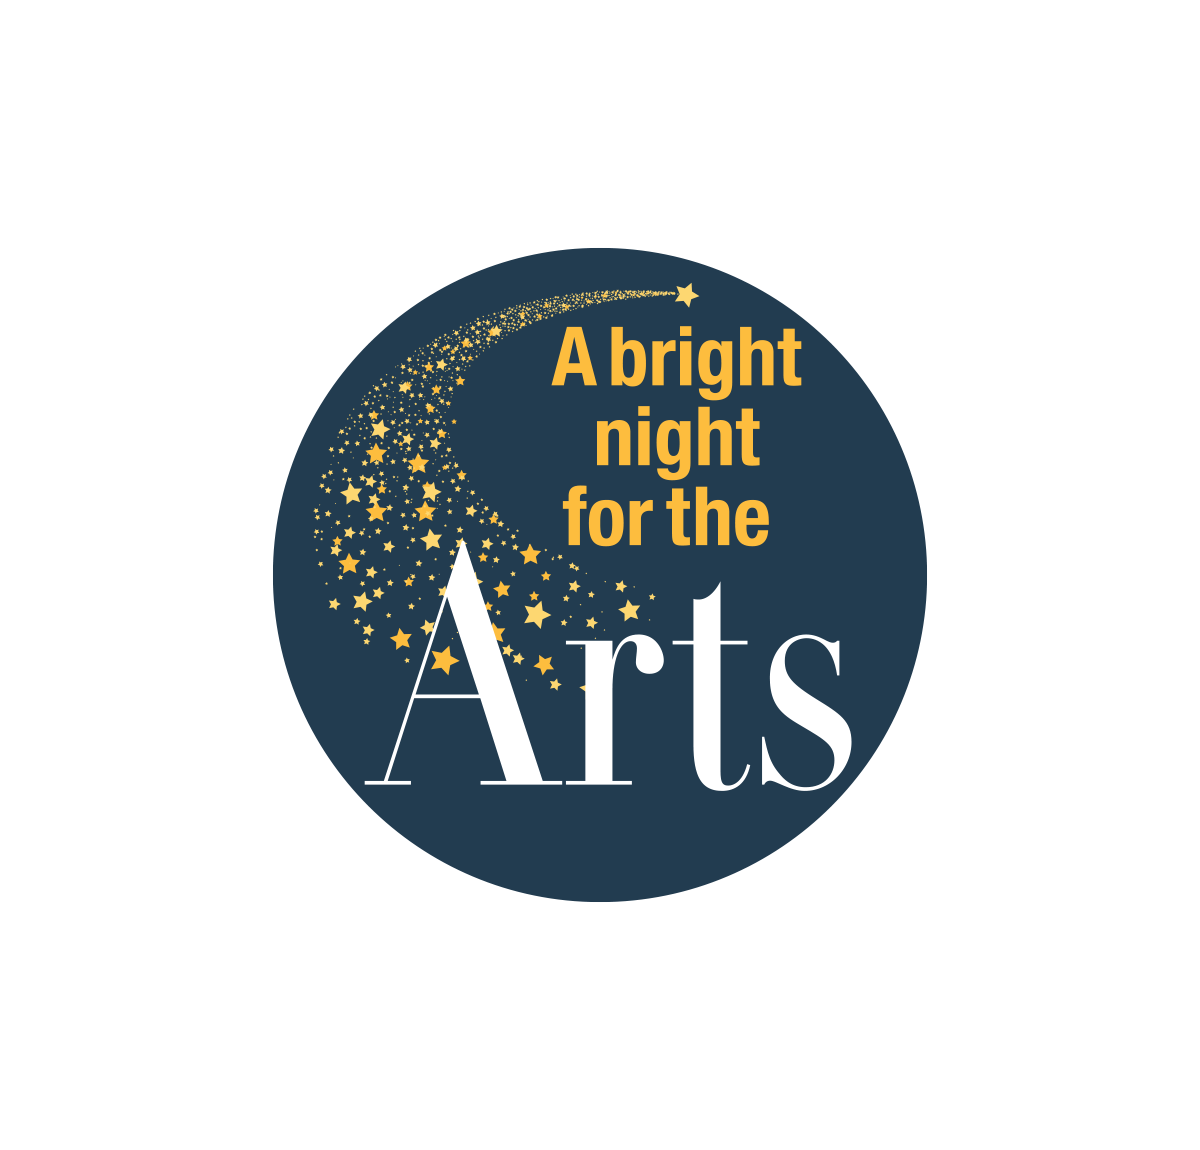 Bright Nights Cultural Arts Event, City of Evanston